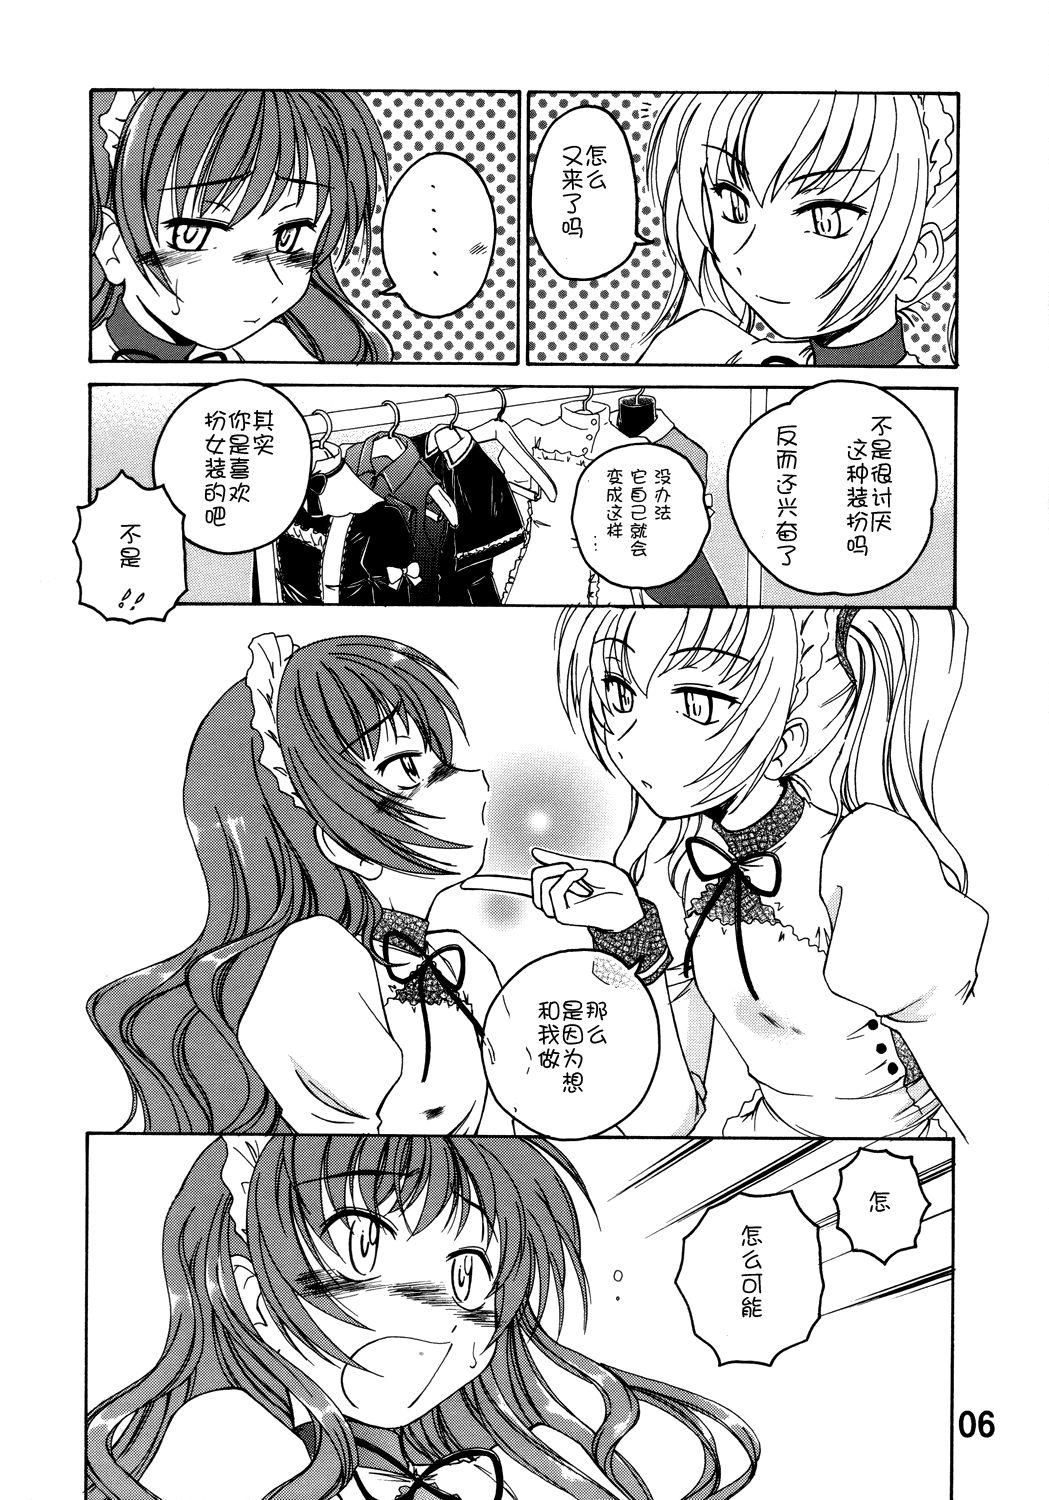 Sensual Manga Sangyou Haikibutsu 11 - Comic Industrial Wastes 11 - Princess princess Femdom Pov - Page 5